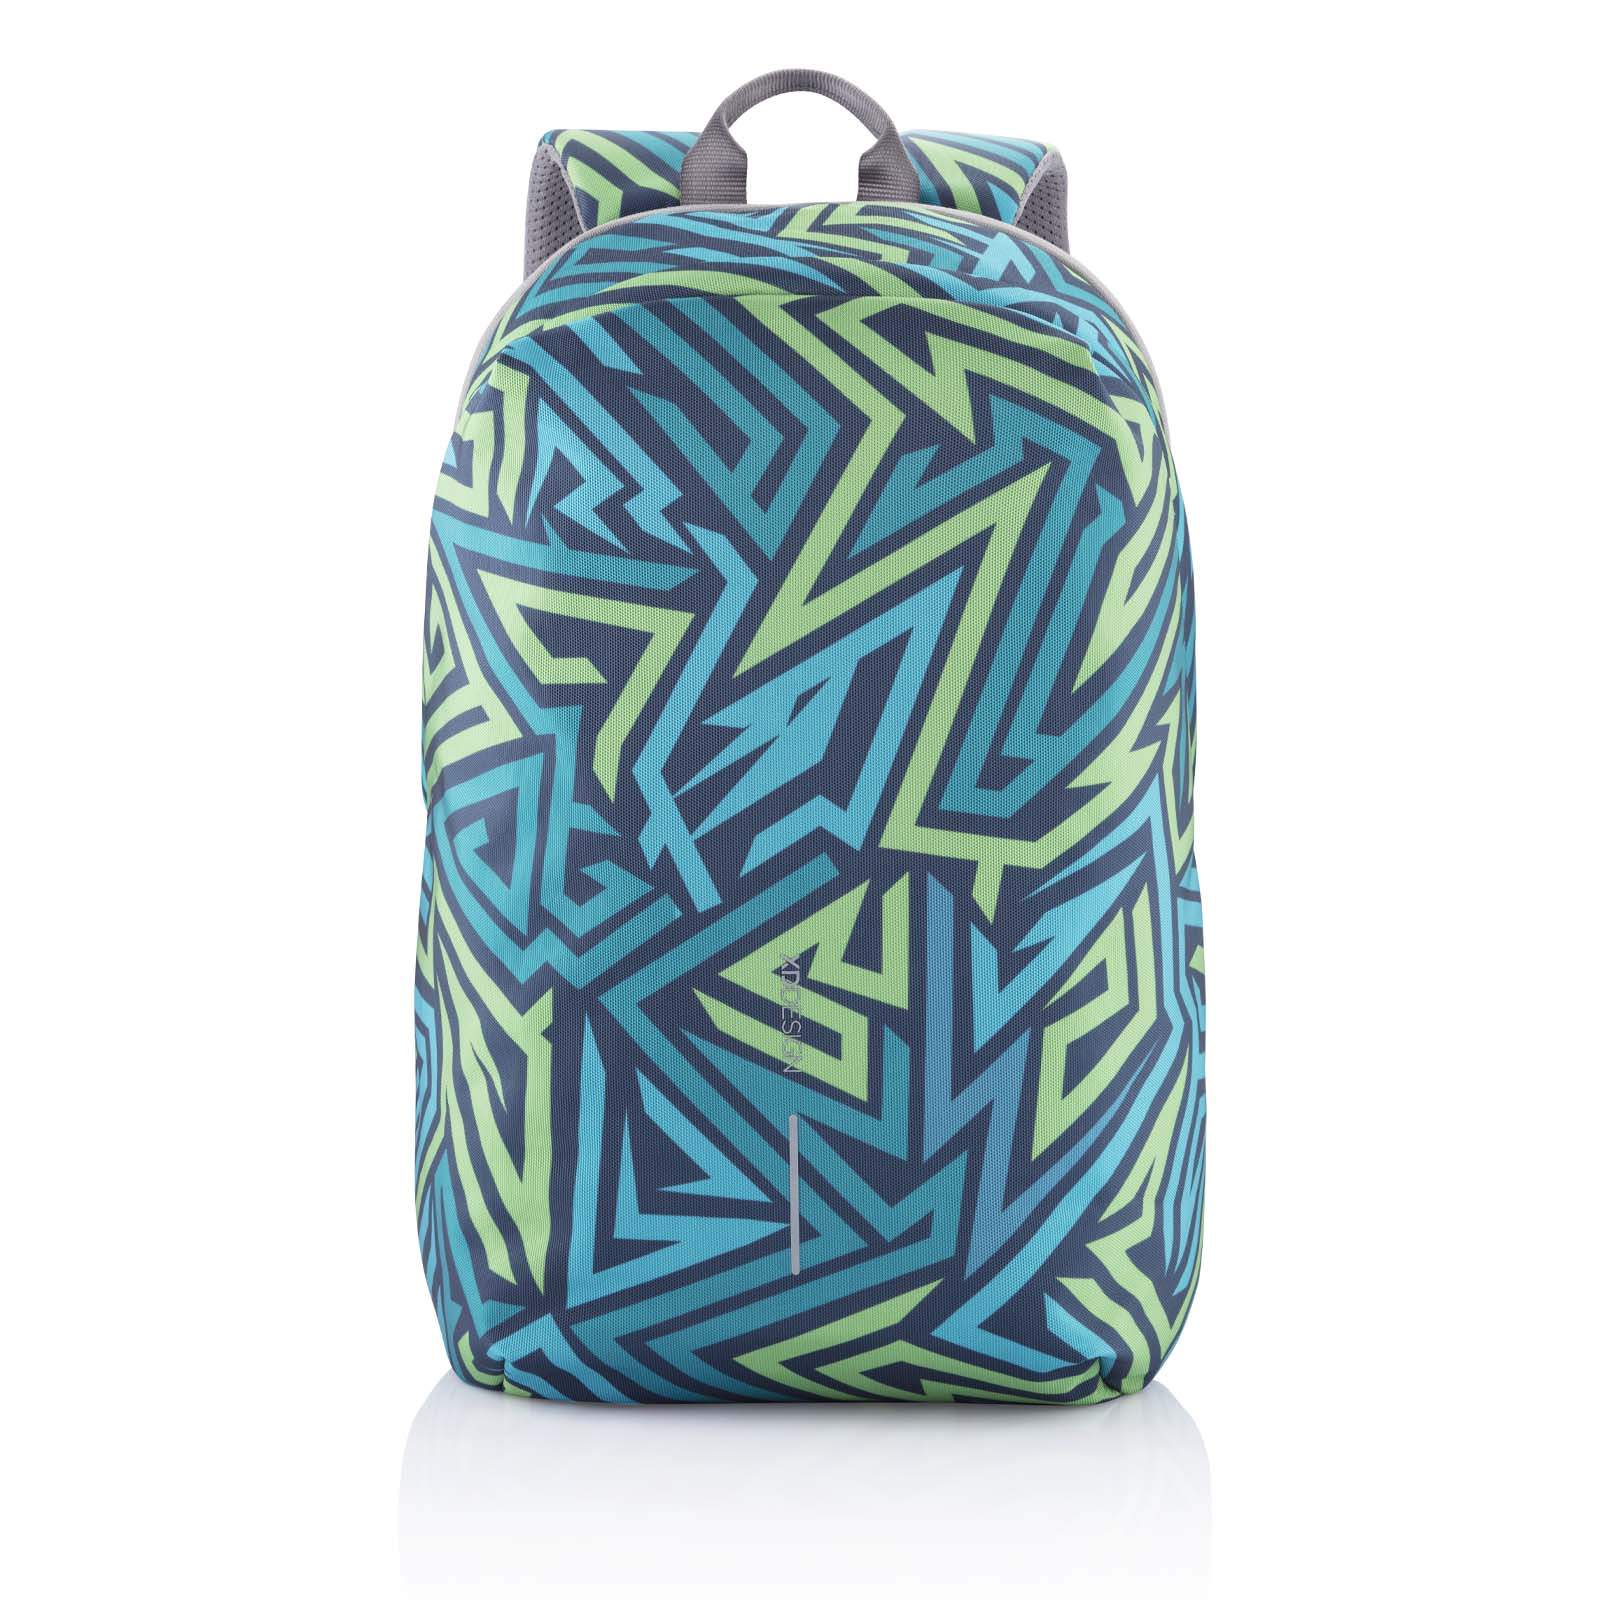 Рюкзак для ноутбука унисекс XD Design Bobby Soft Art 15,6" абстракт